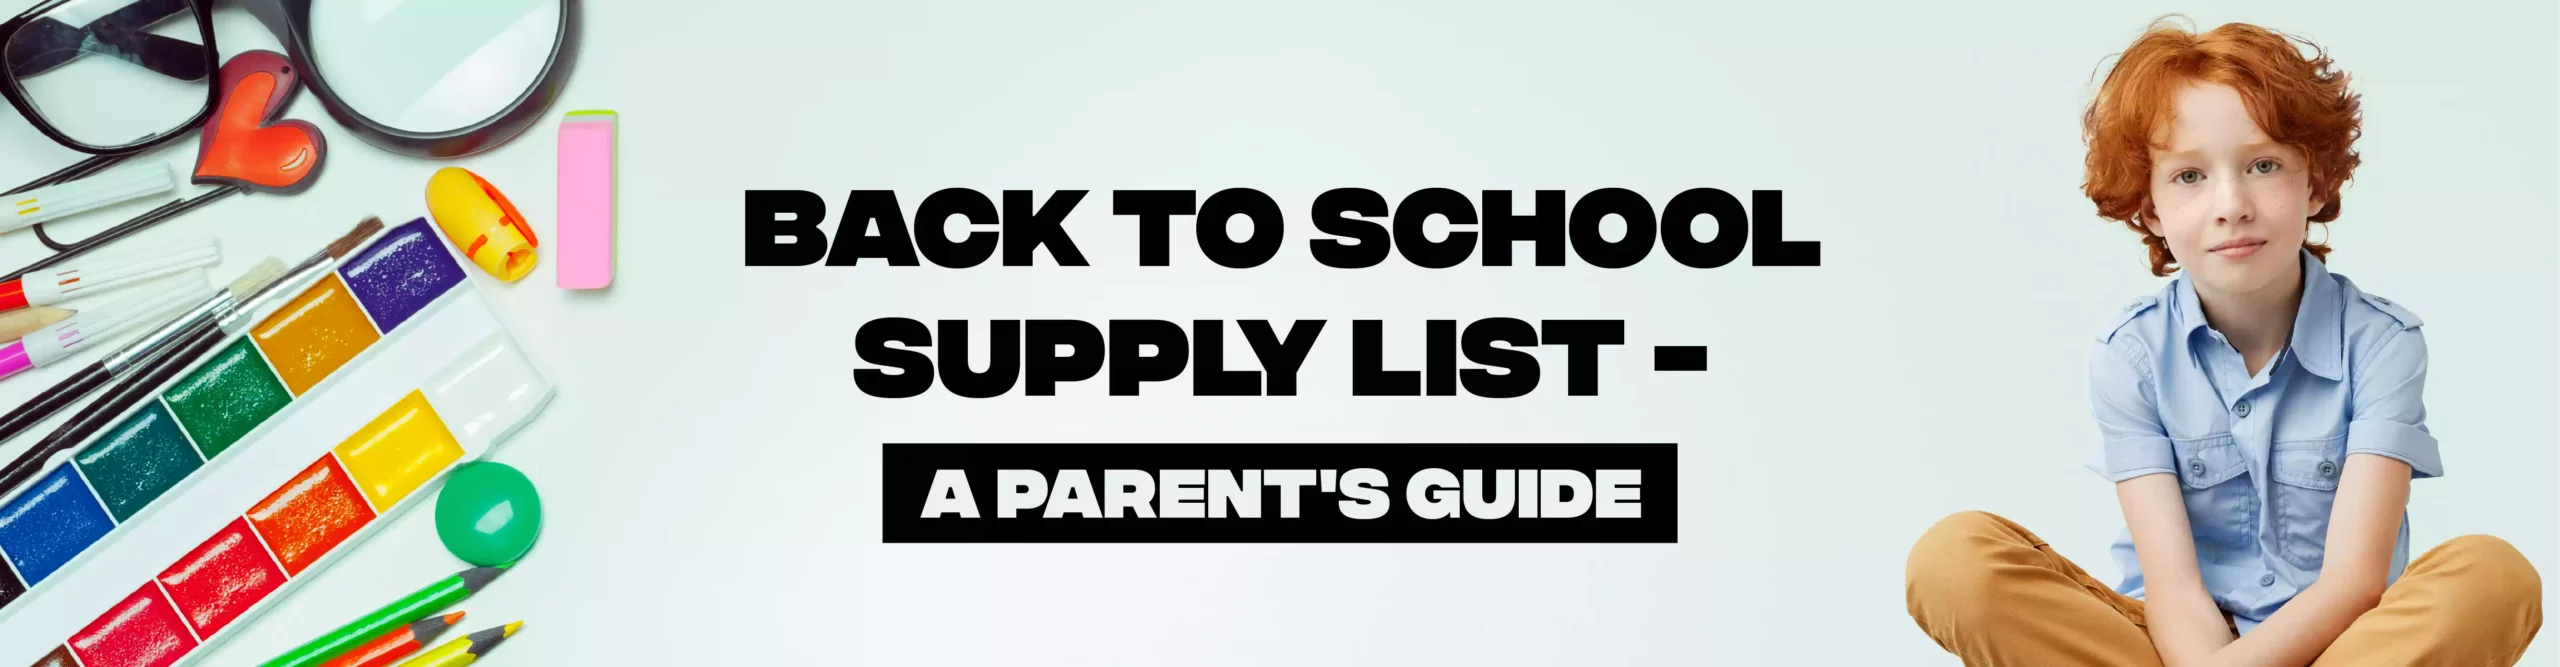 Back to School Supply List